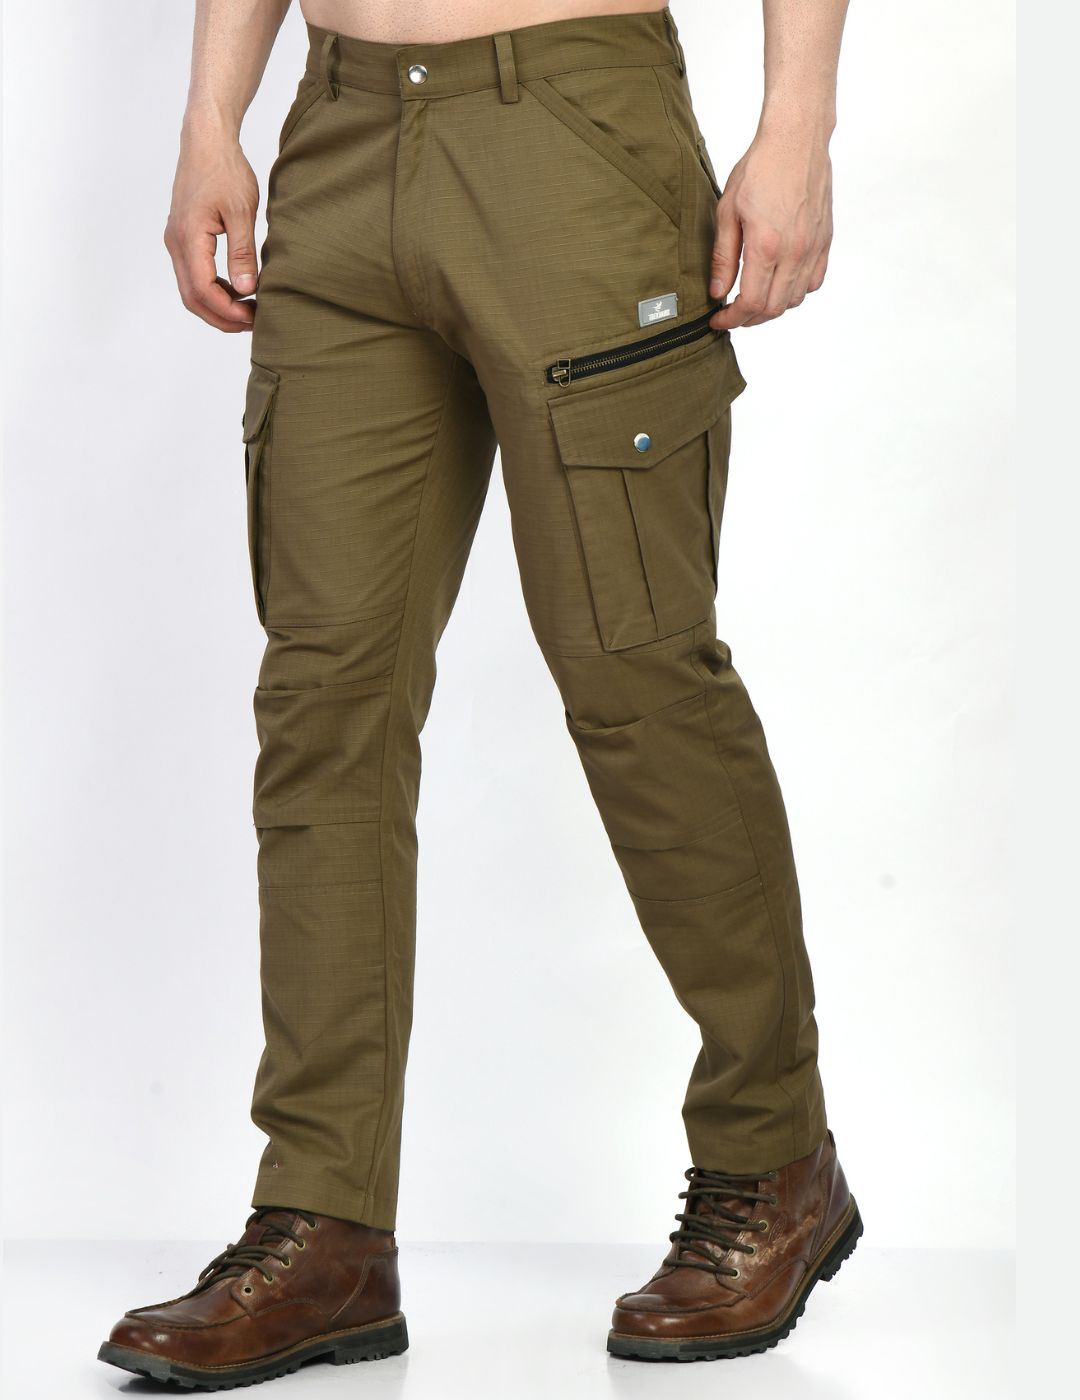 LT KHAKI 6 Pocket Slim Fit Cargo Pant  ROOKIES